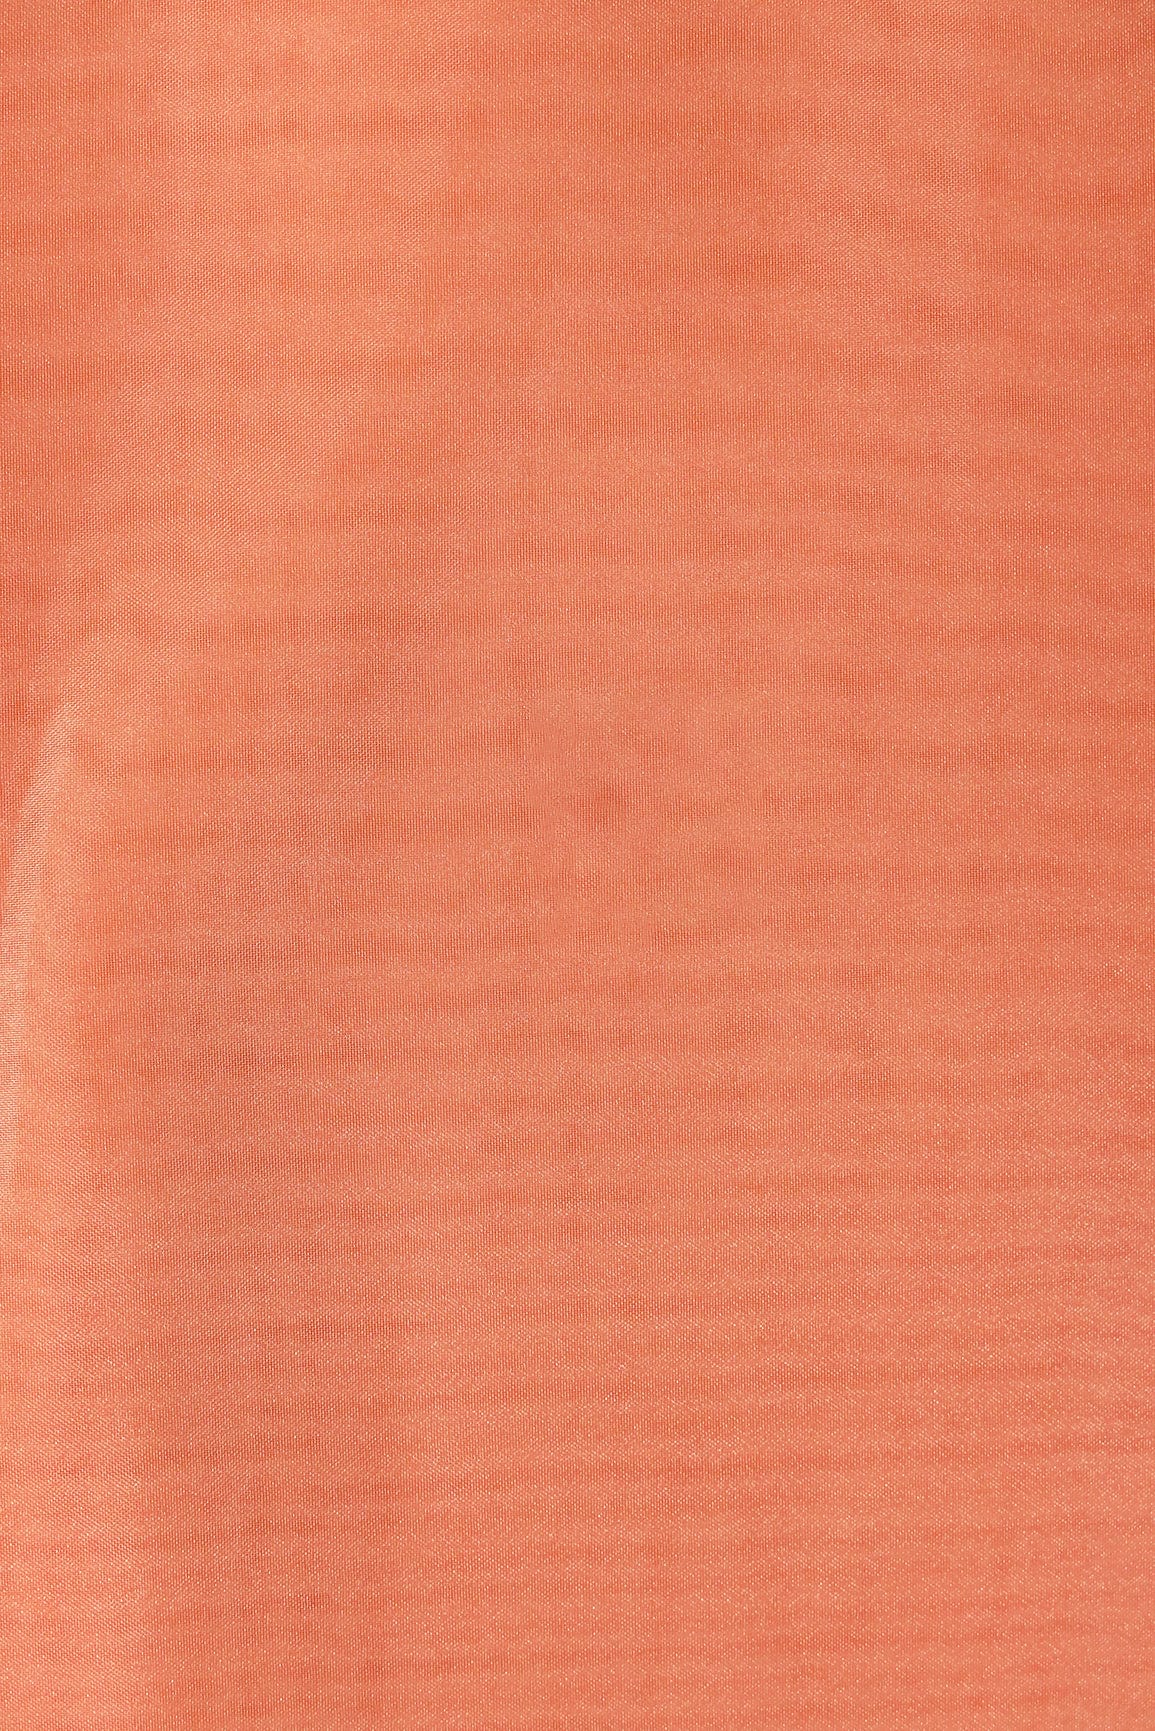 doeraa Plain Dyed Fabrics Peach Dyed Tissue Fabric